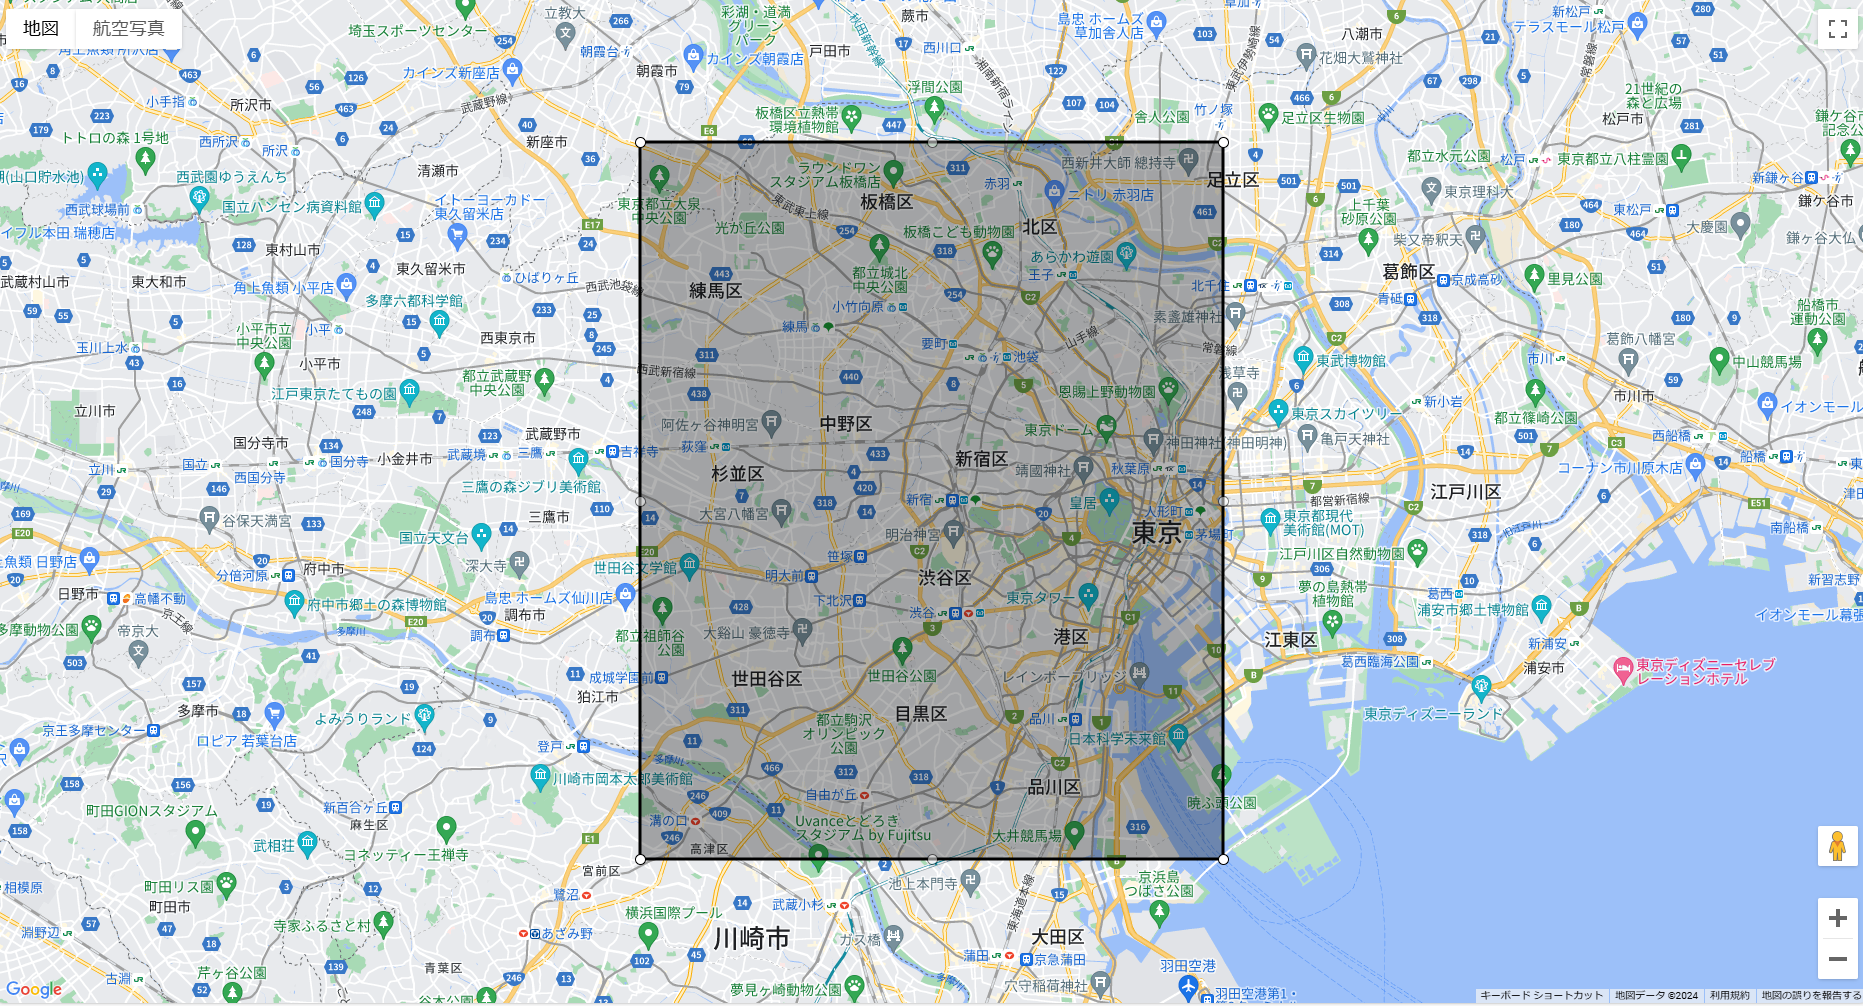 "Google Maps API" Rectangle